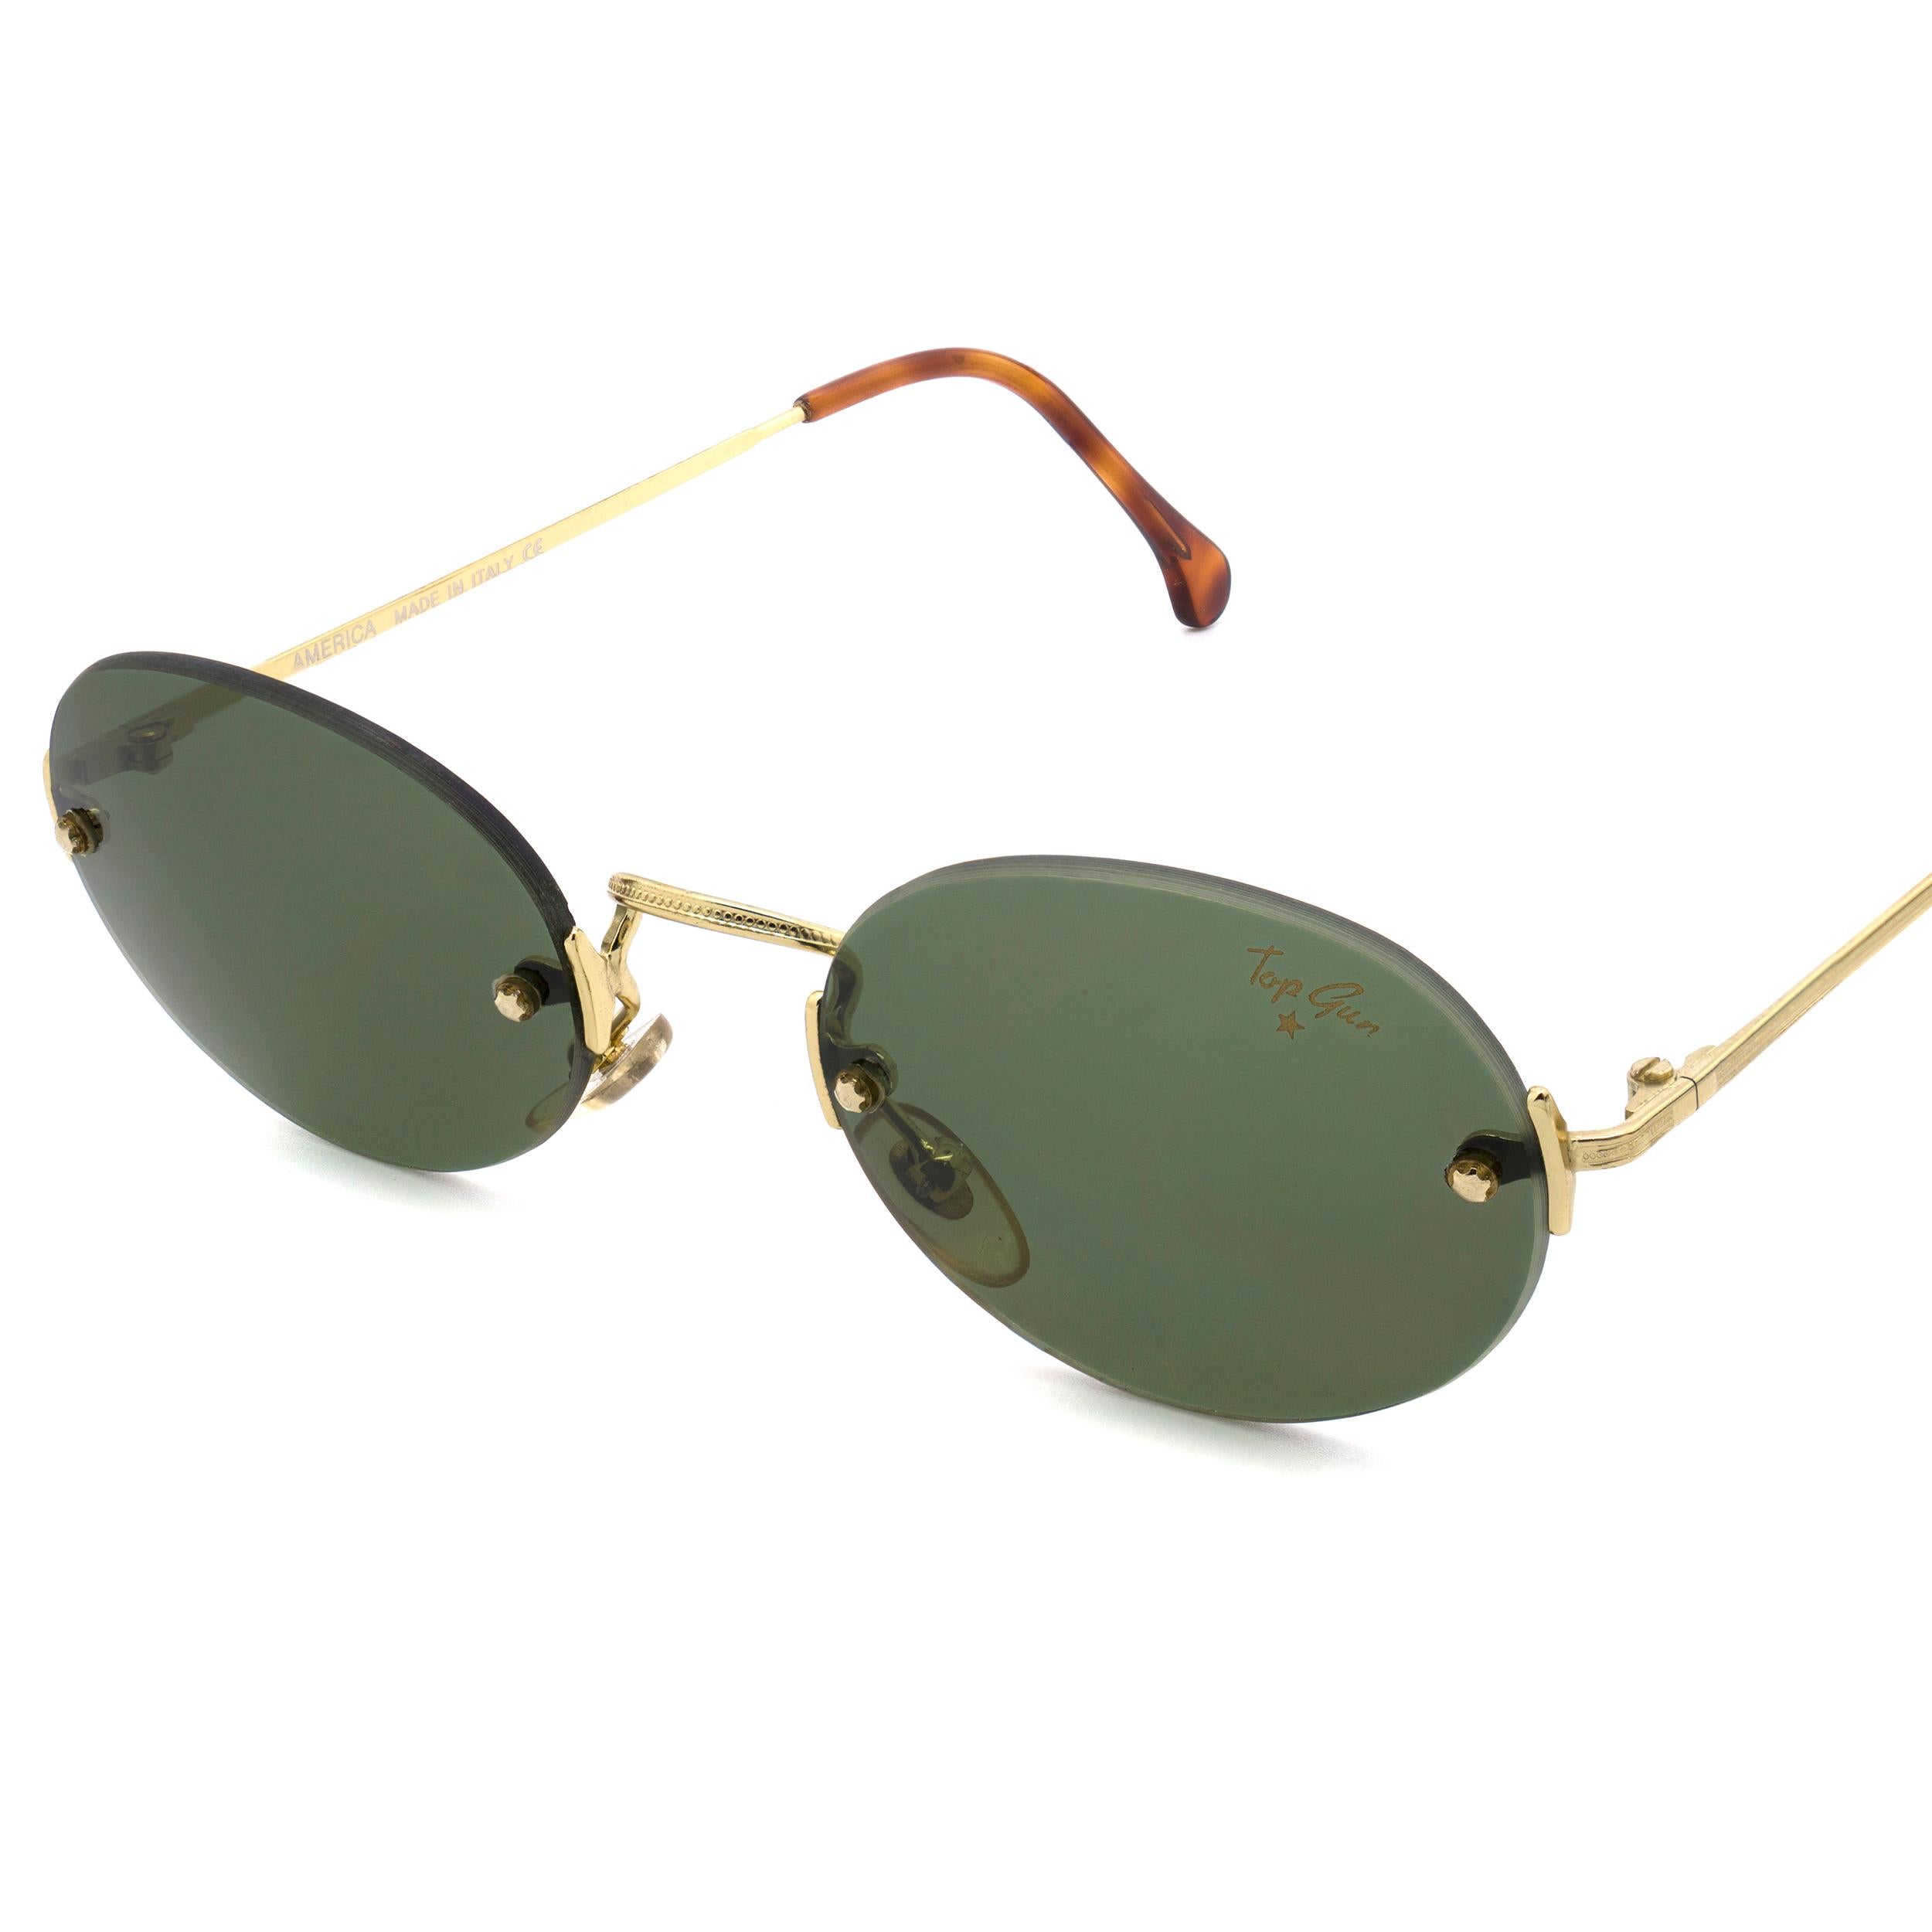 Top Gun oval rimless vintage sunglasses, Italy 90s In New Condition For Sale In Santa Clarita, CA